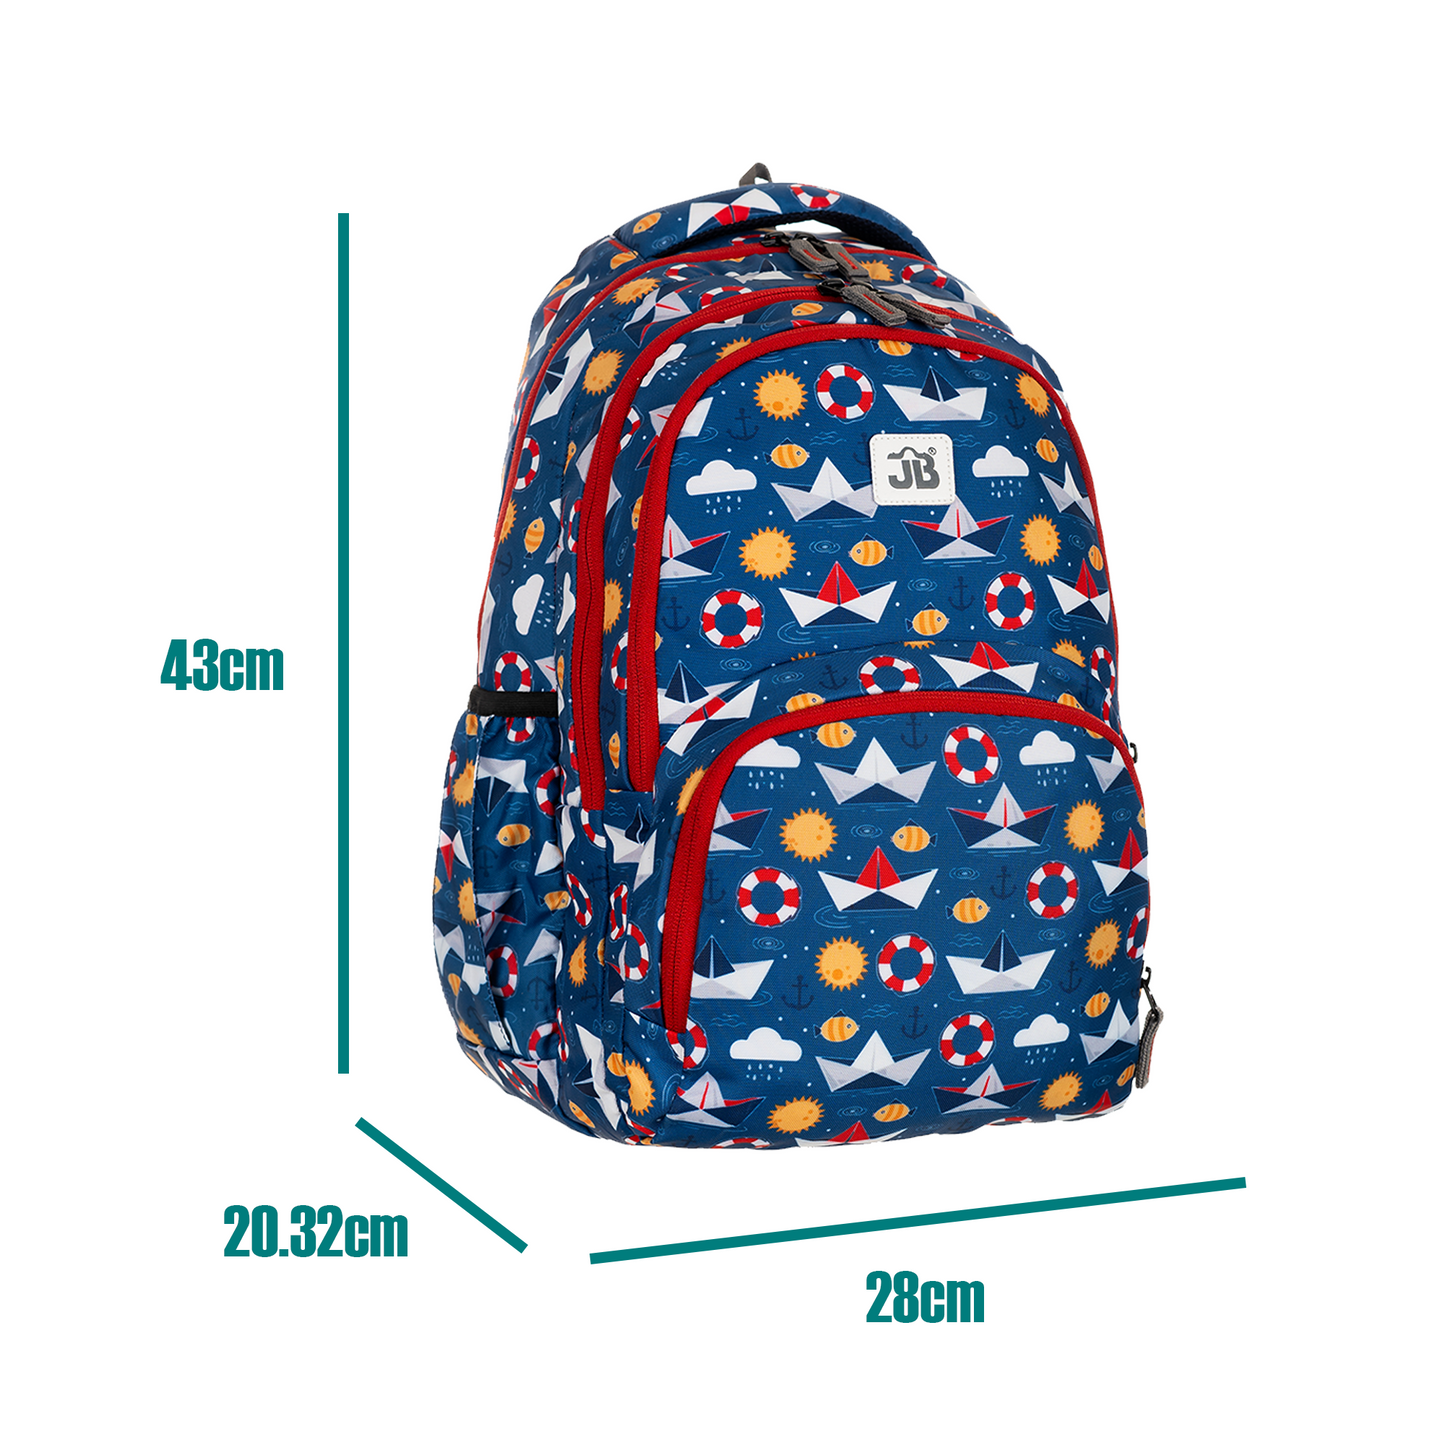 Mariner's Mate Printed School Backpack - 17 Inch (Navy Blue)